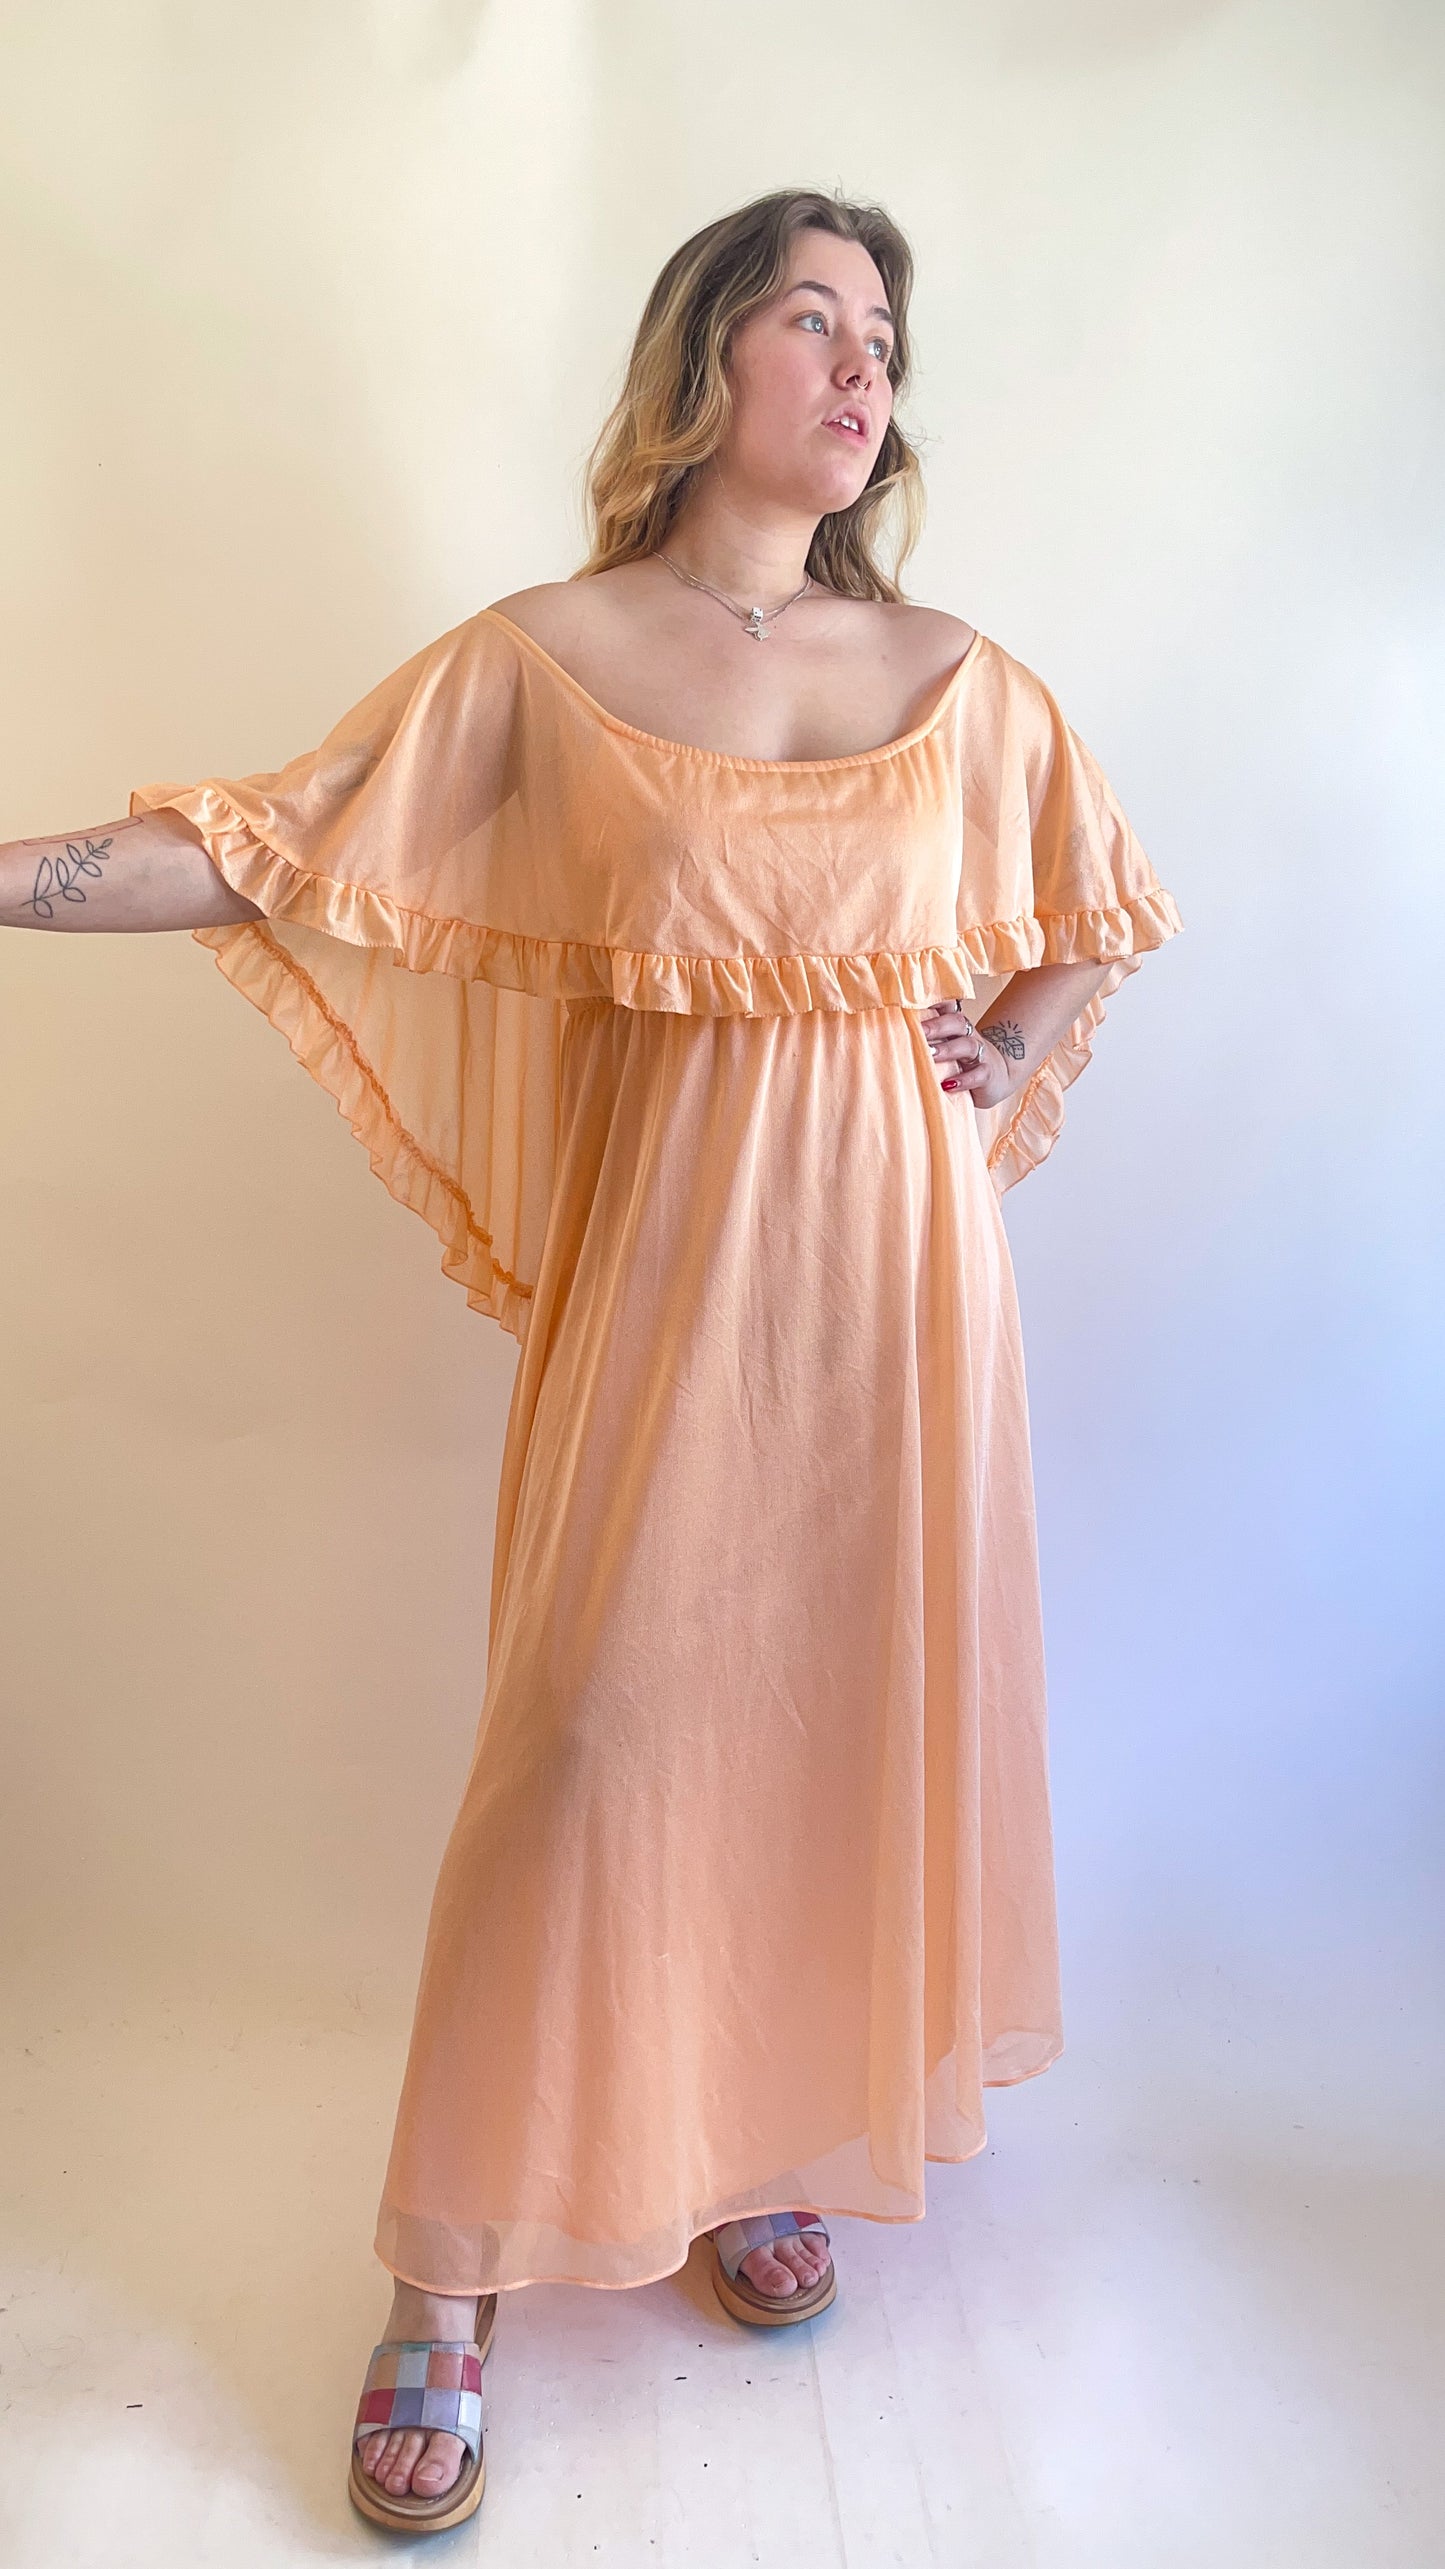 70s Peach Ruffled Cape Maxi Dress (M)